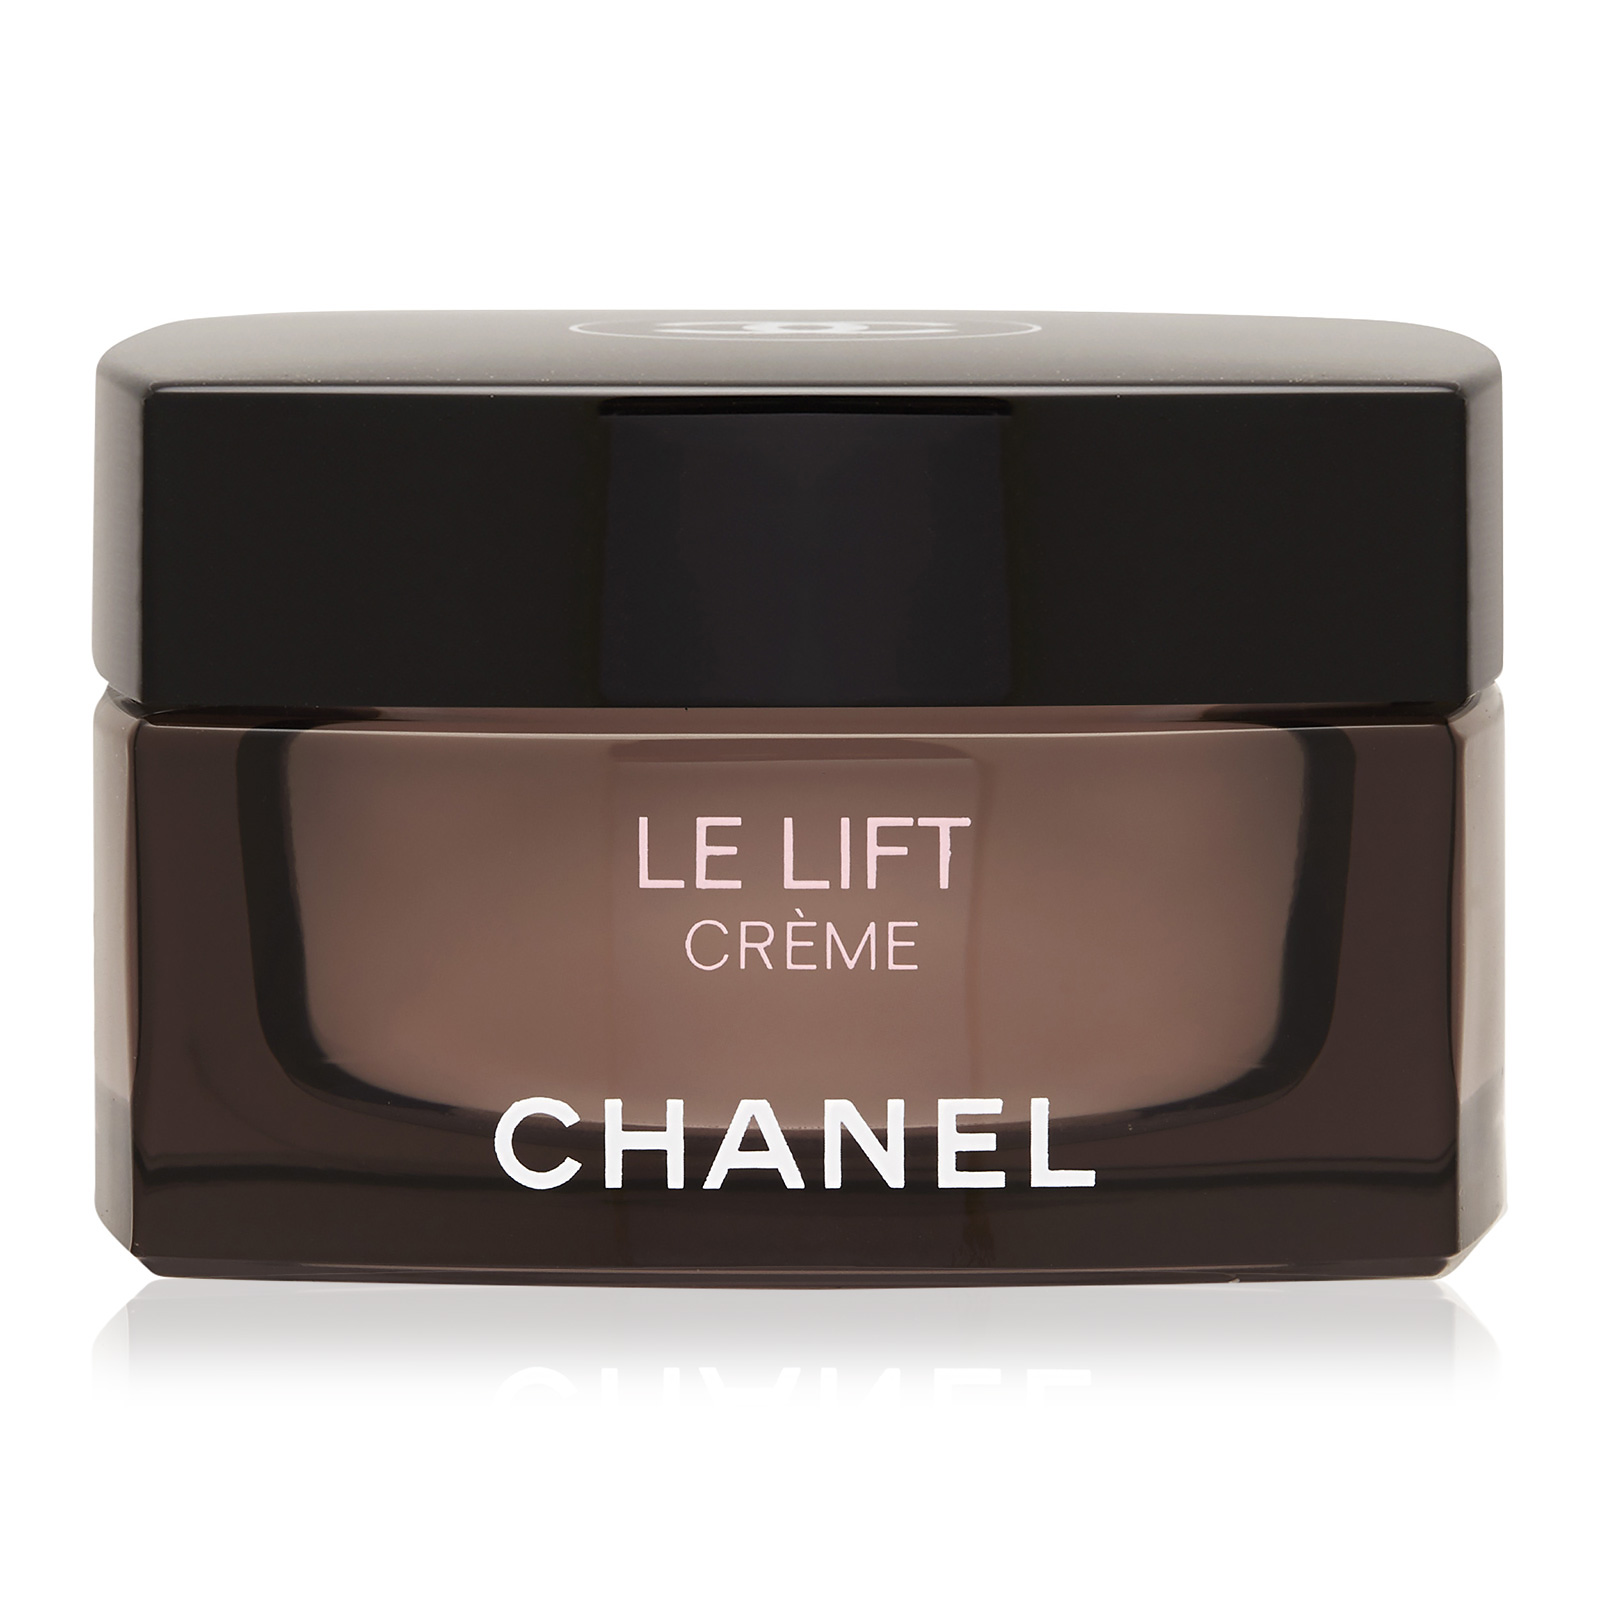 om kontrast Settle Chanel Le Lift Crème50 ml 1.7 oz AKB Beauty